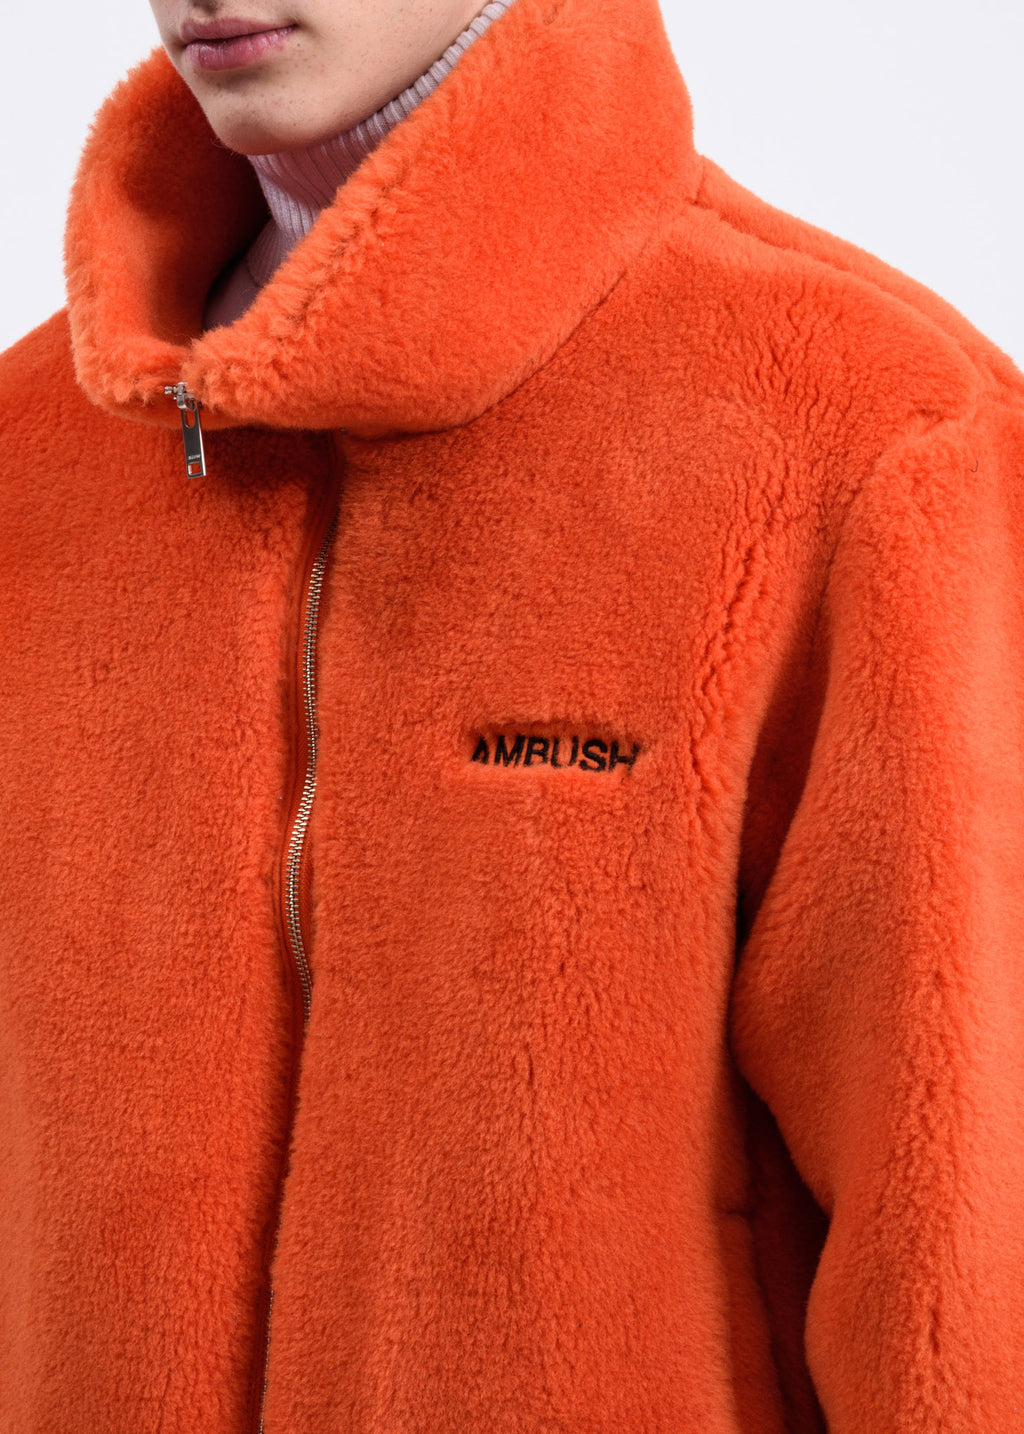 017 Shop | Ambush Orange Wool Fleece Jacket